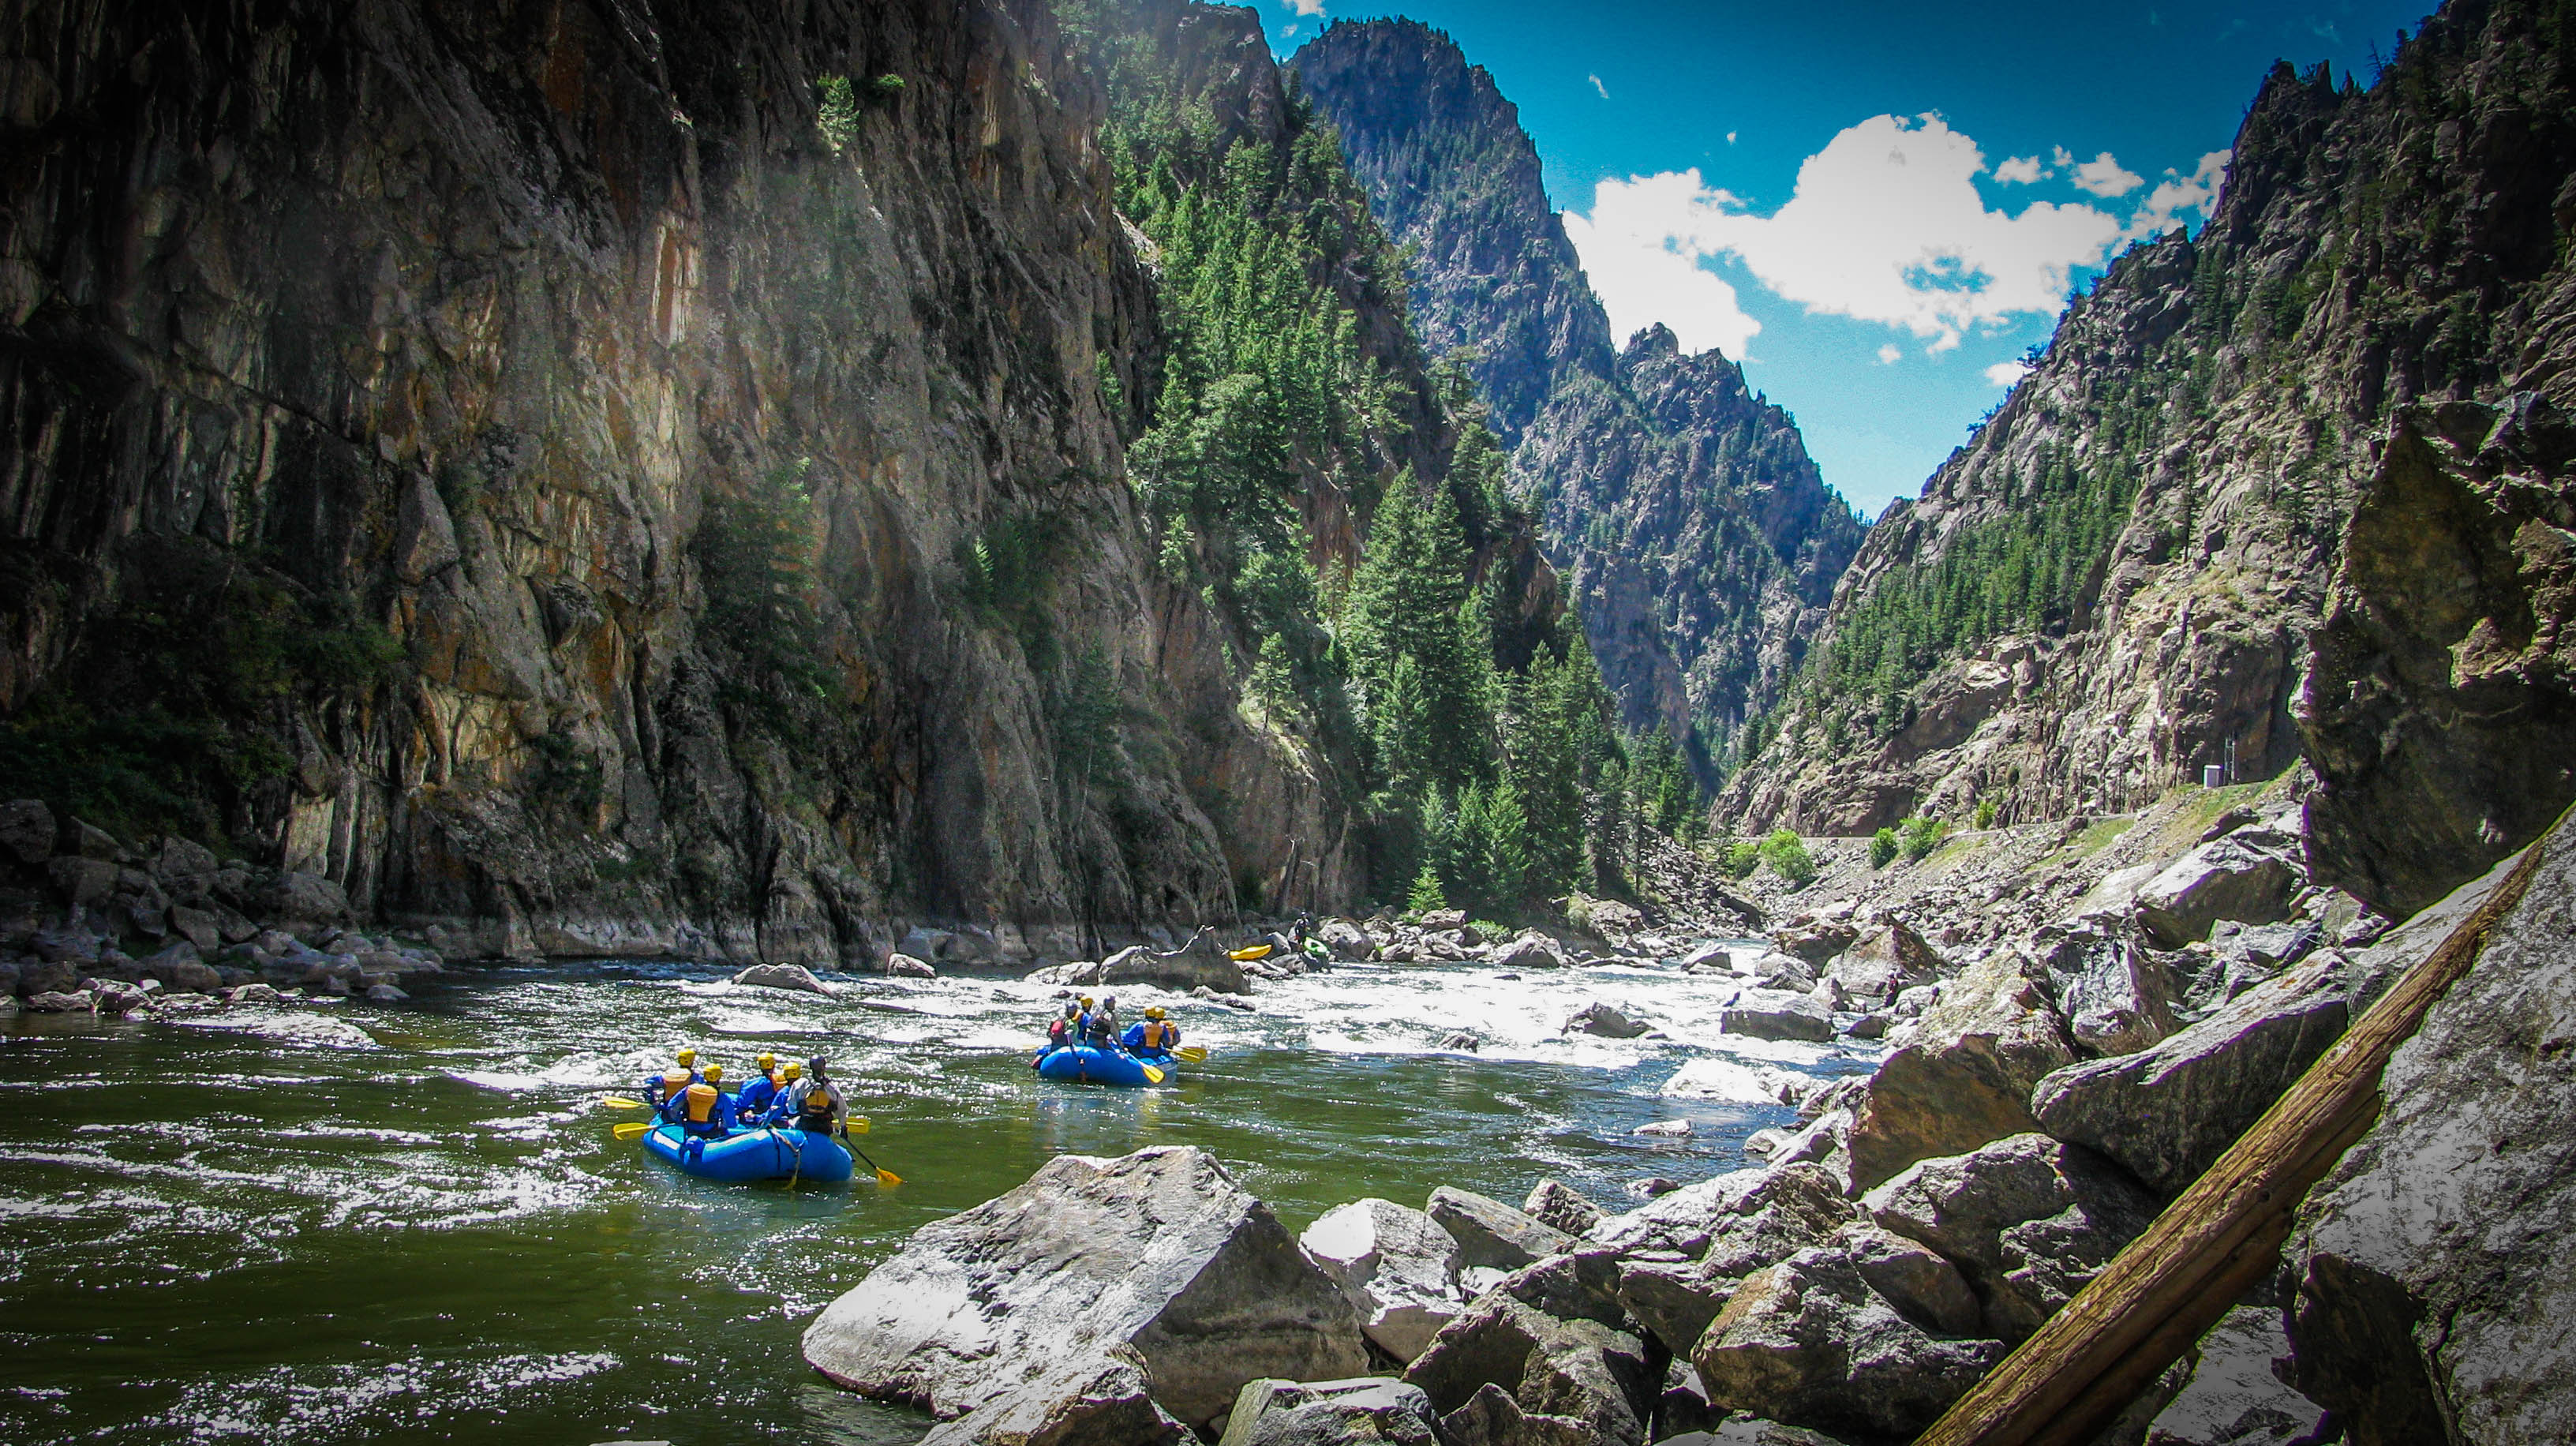 Colorado River - Gore Canyon Full Day Expedition